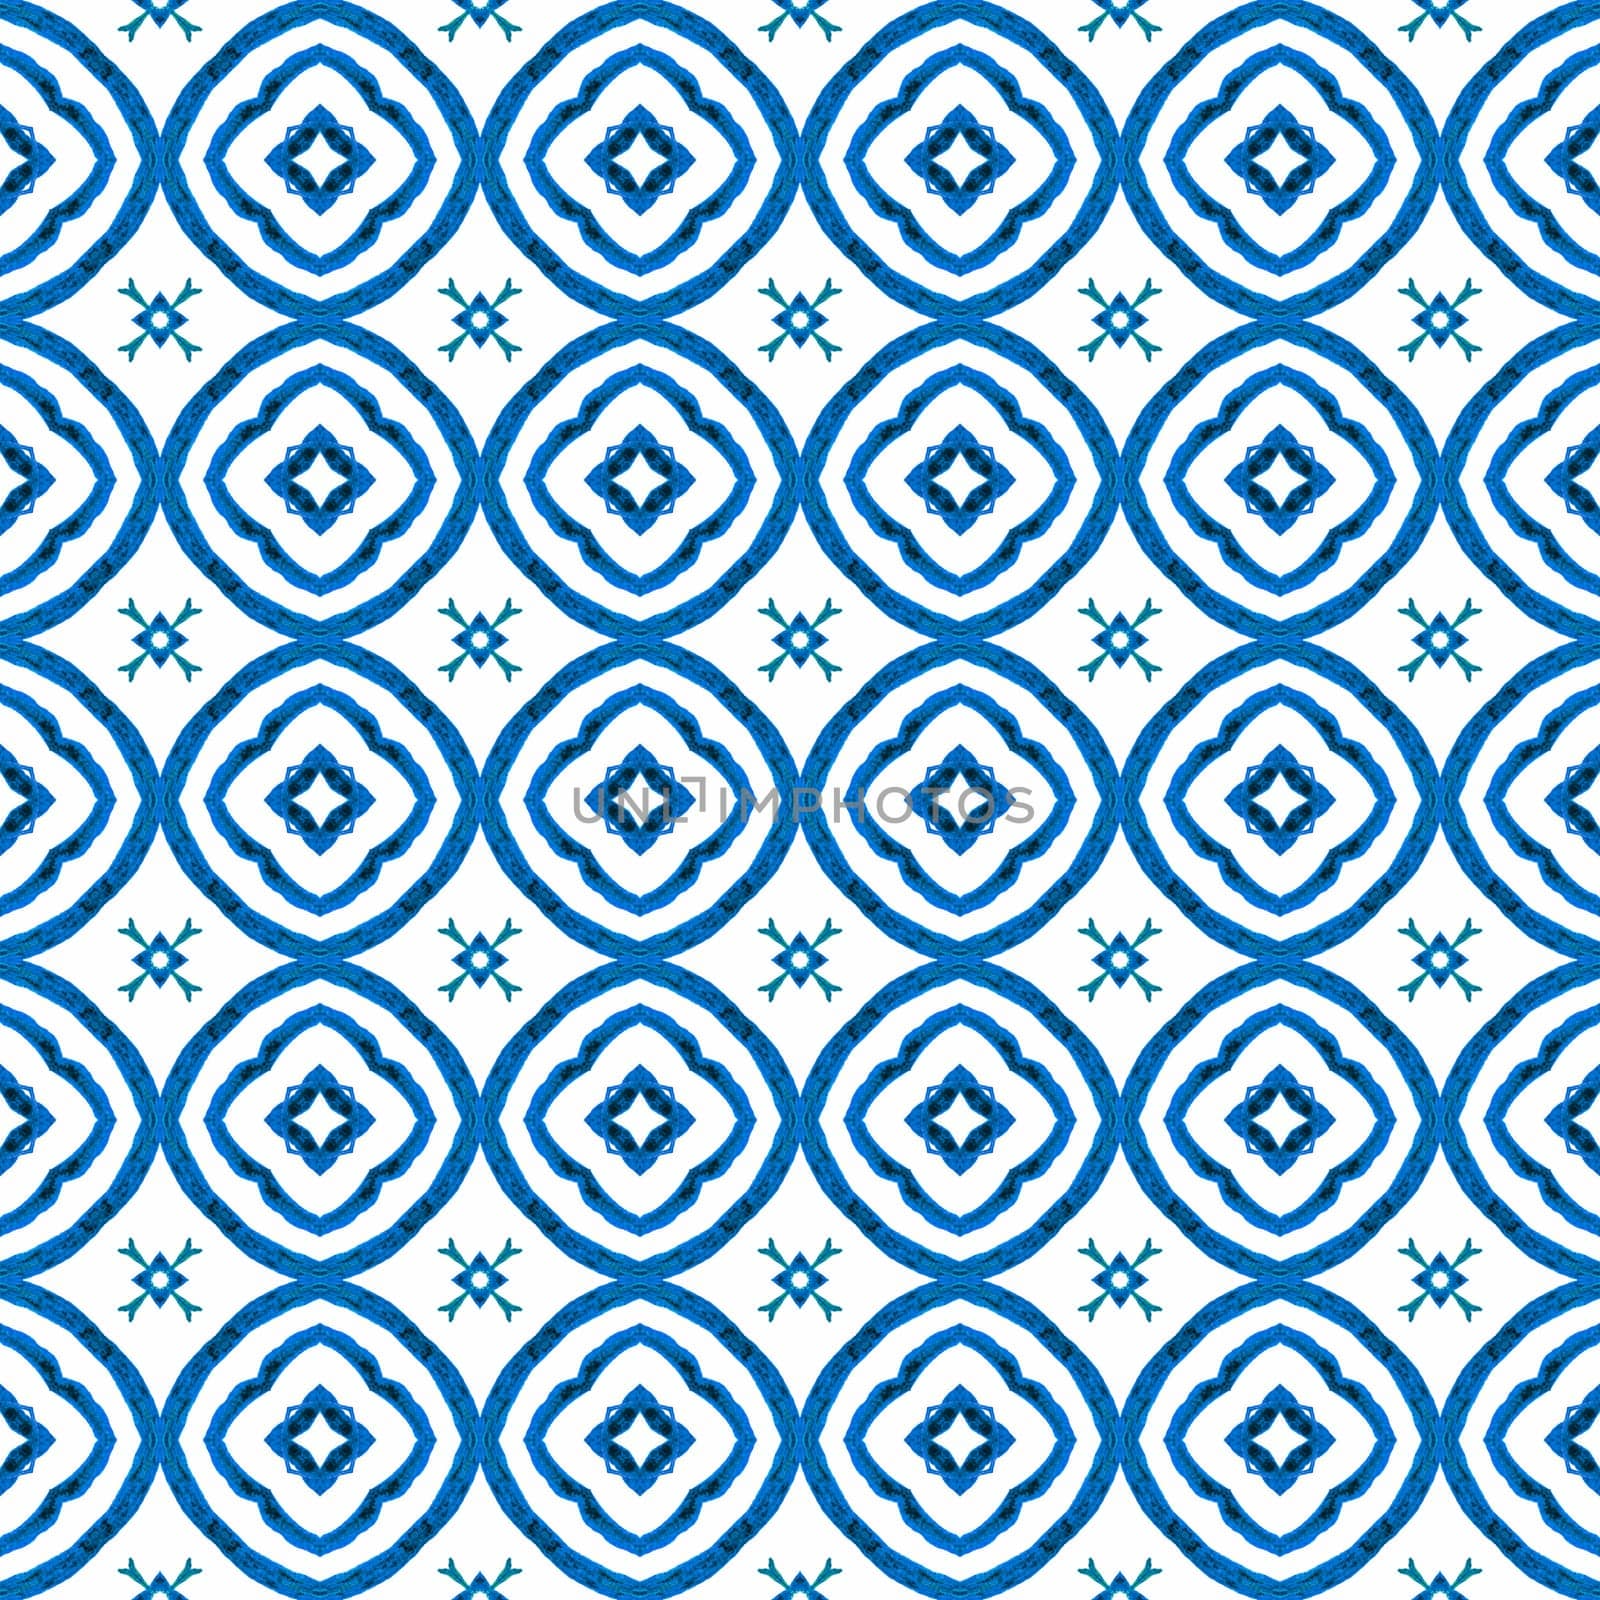 Mosaic seamless pattern. Blue imaginative boho chic summer design. Hand drawn green mosaic seamless border. Textile ready delicate print, swimwear fabric, wallpaper, wrapping.